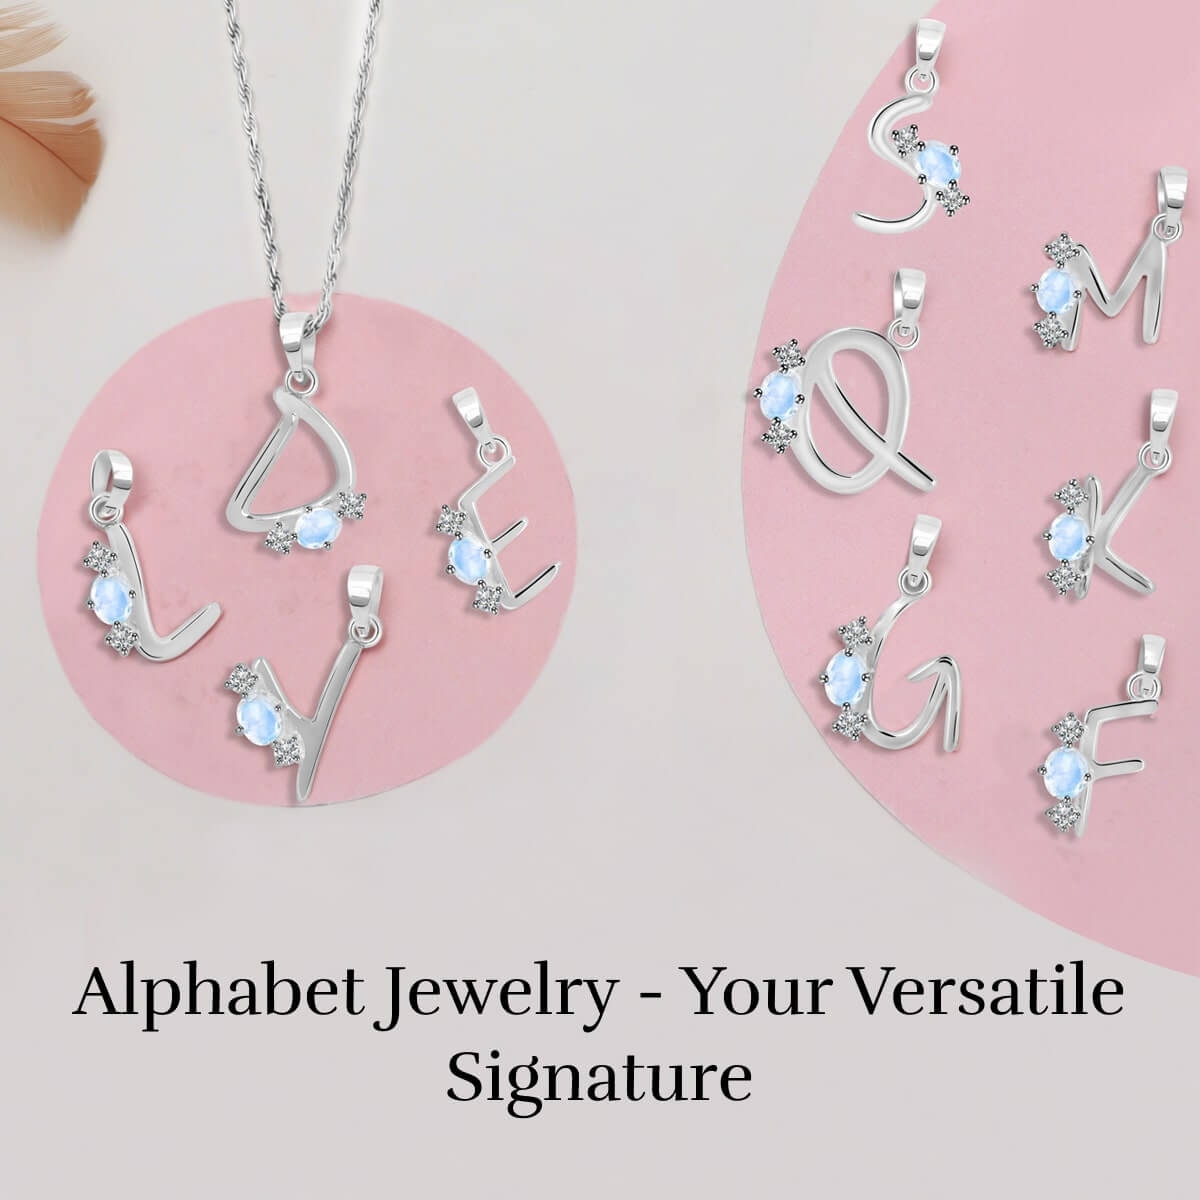 Alphabet jewelry: versatility